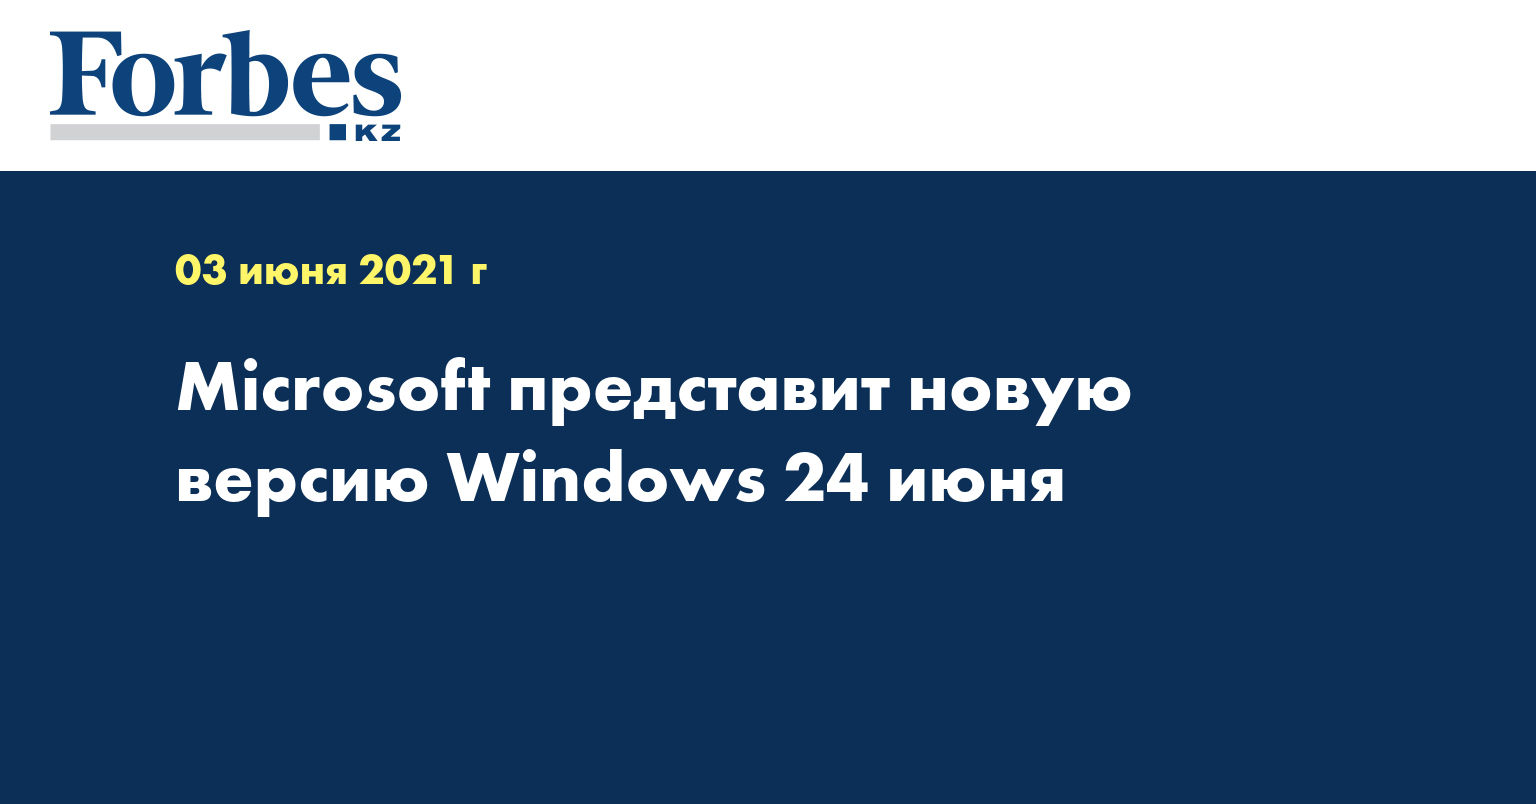 Microsoft представит новую версию Windows 24 июня